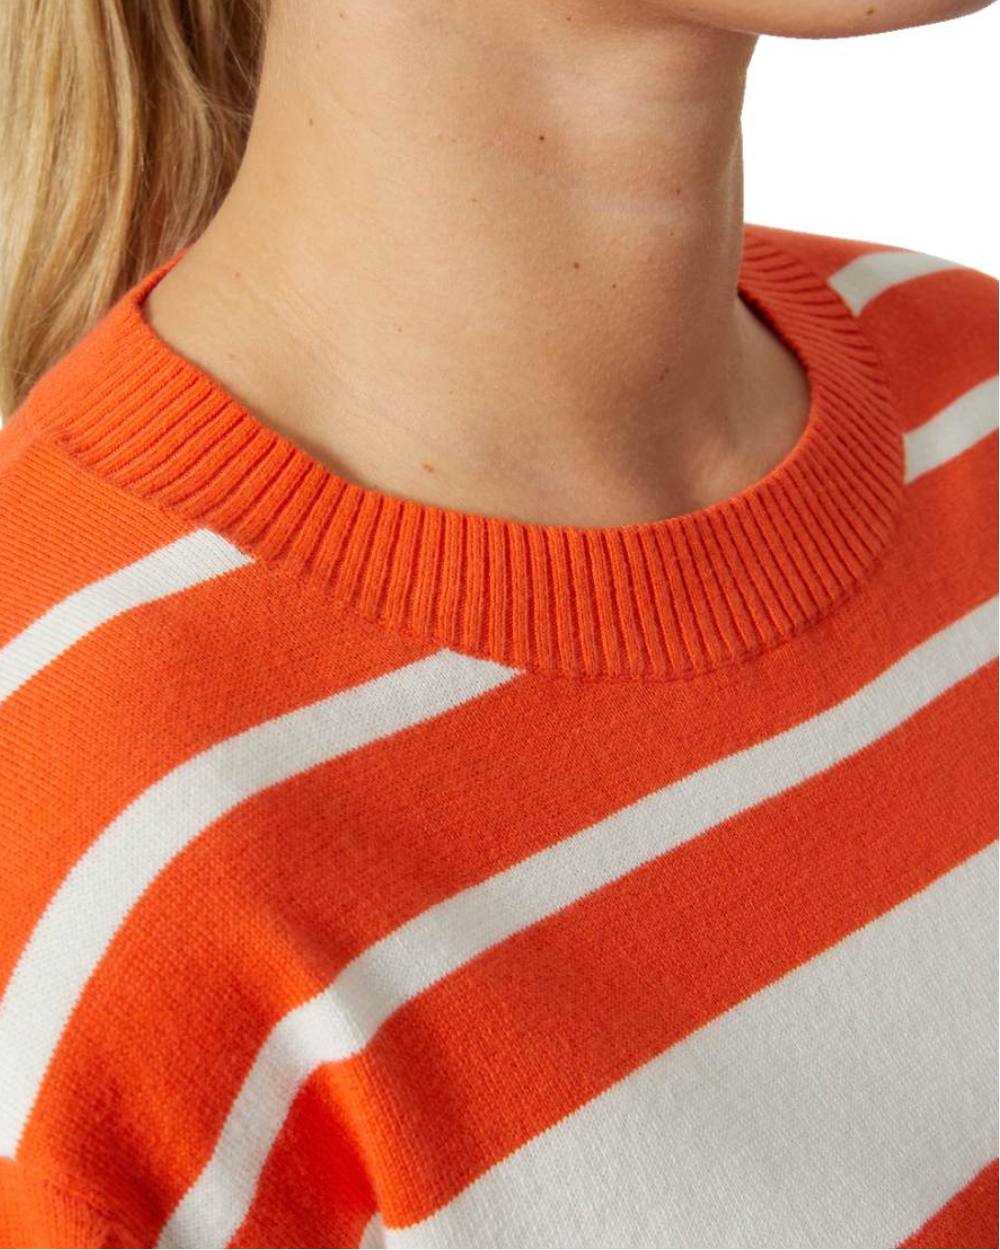 Flame Stripe Coloured Helly Hansen Womens Skagen Sweater 2.0 On A White Background 